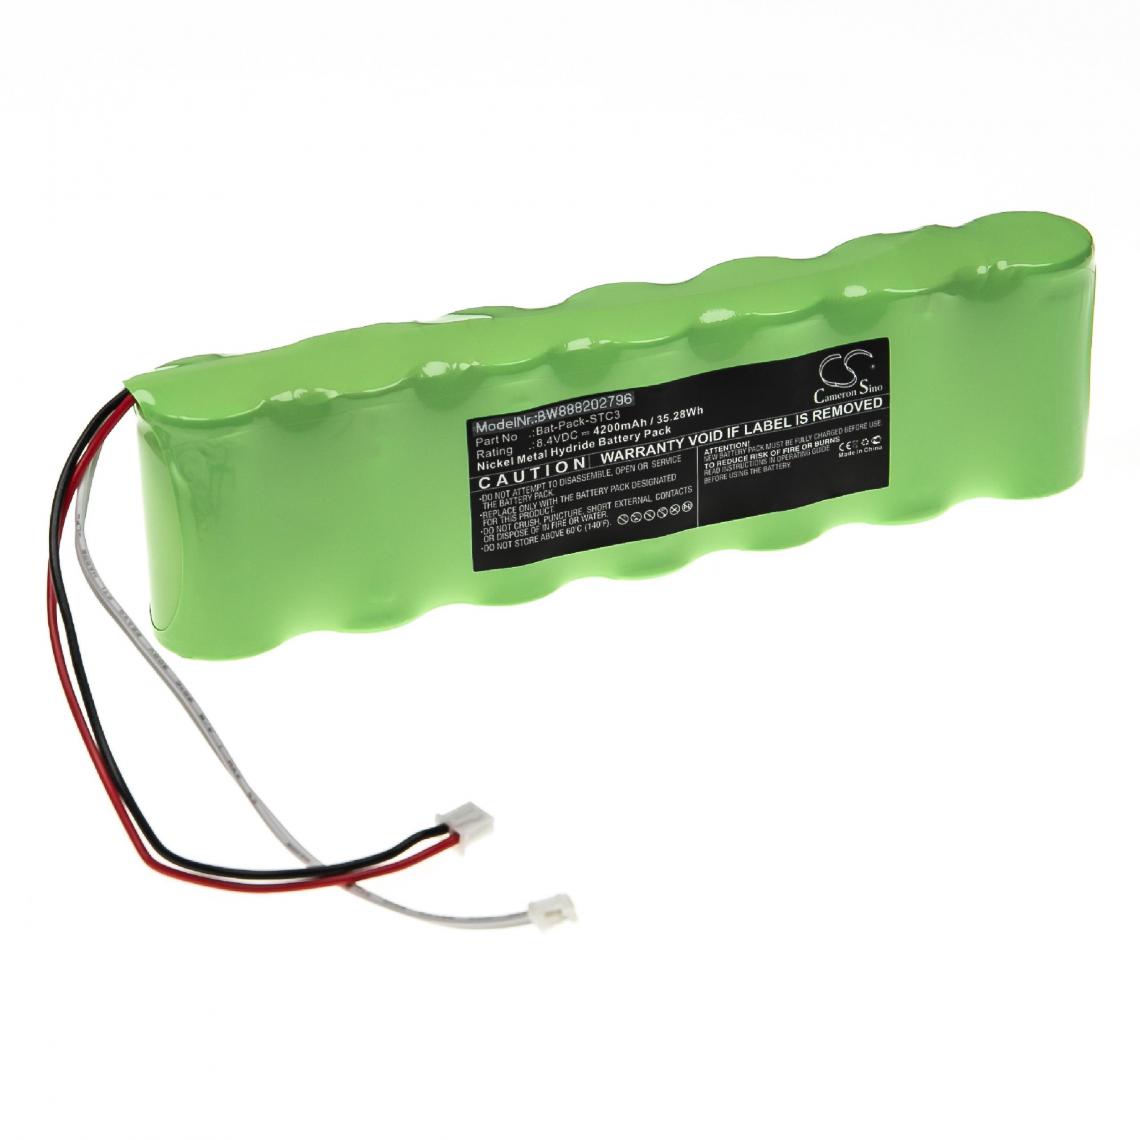 Vhbw - vhbw Batterie compatible avec Rover Atom Power STC, CNg, Digicube, Foa, HD ATSC USA, HD Cable outil de mesure (4200mAh, 8,4V, NiMH) - Piles rechargeables